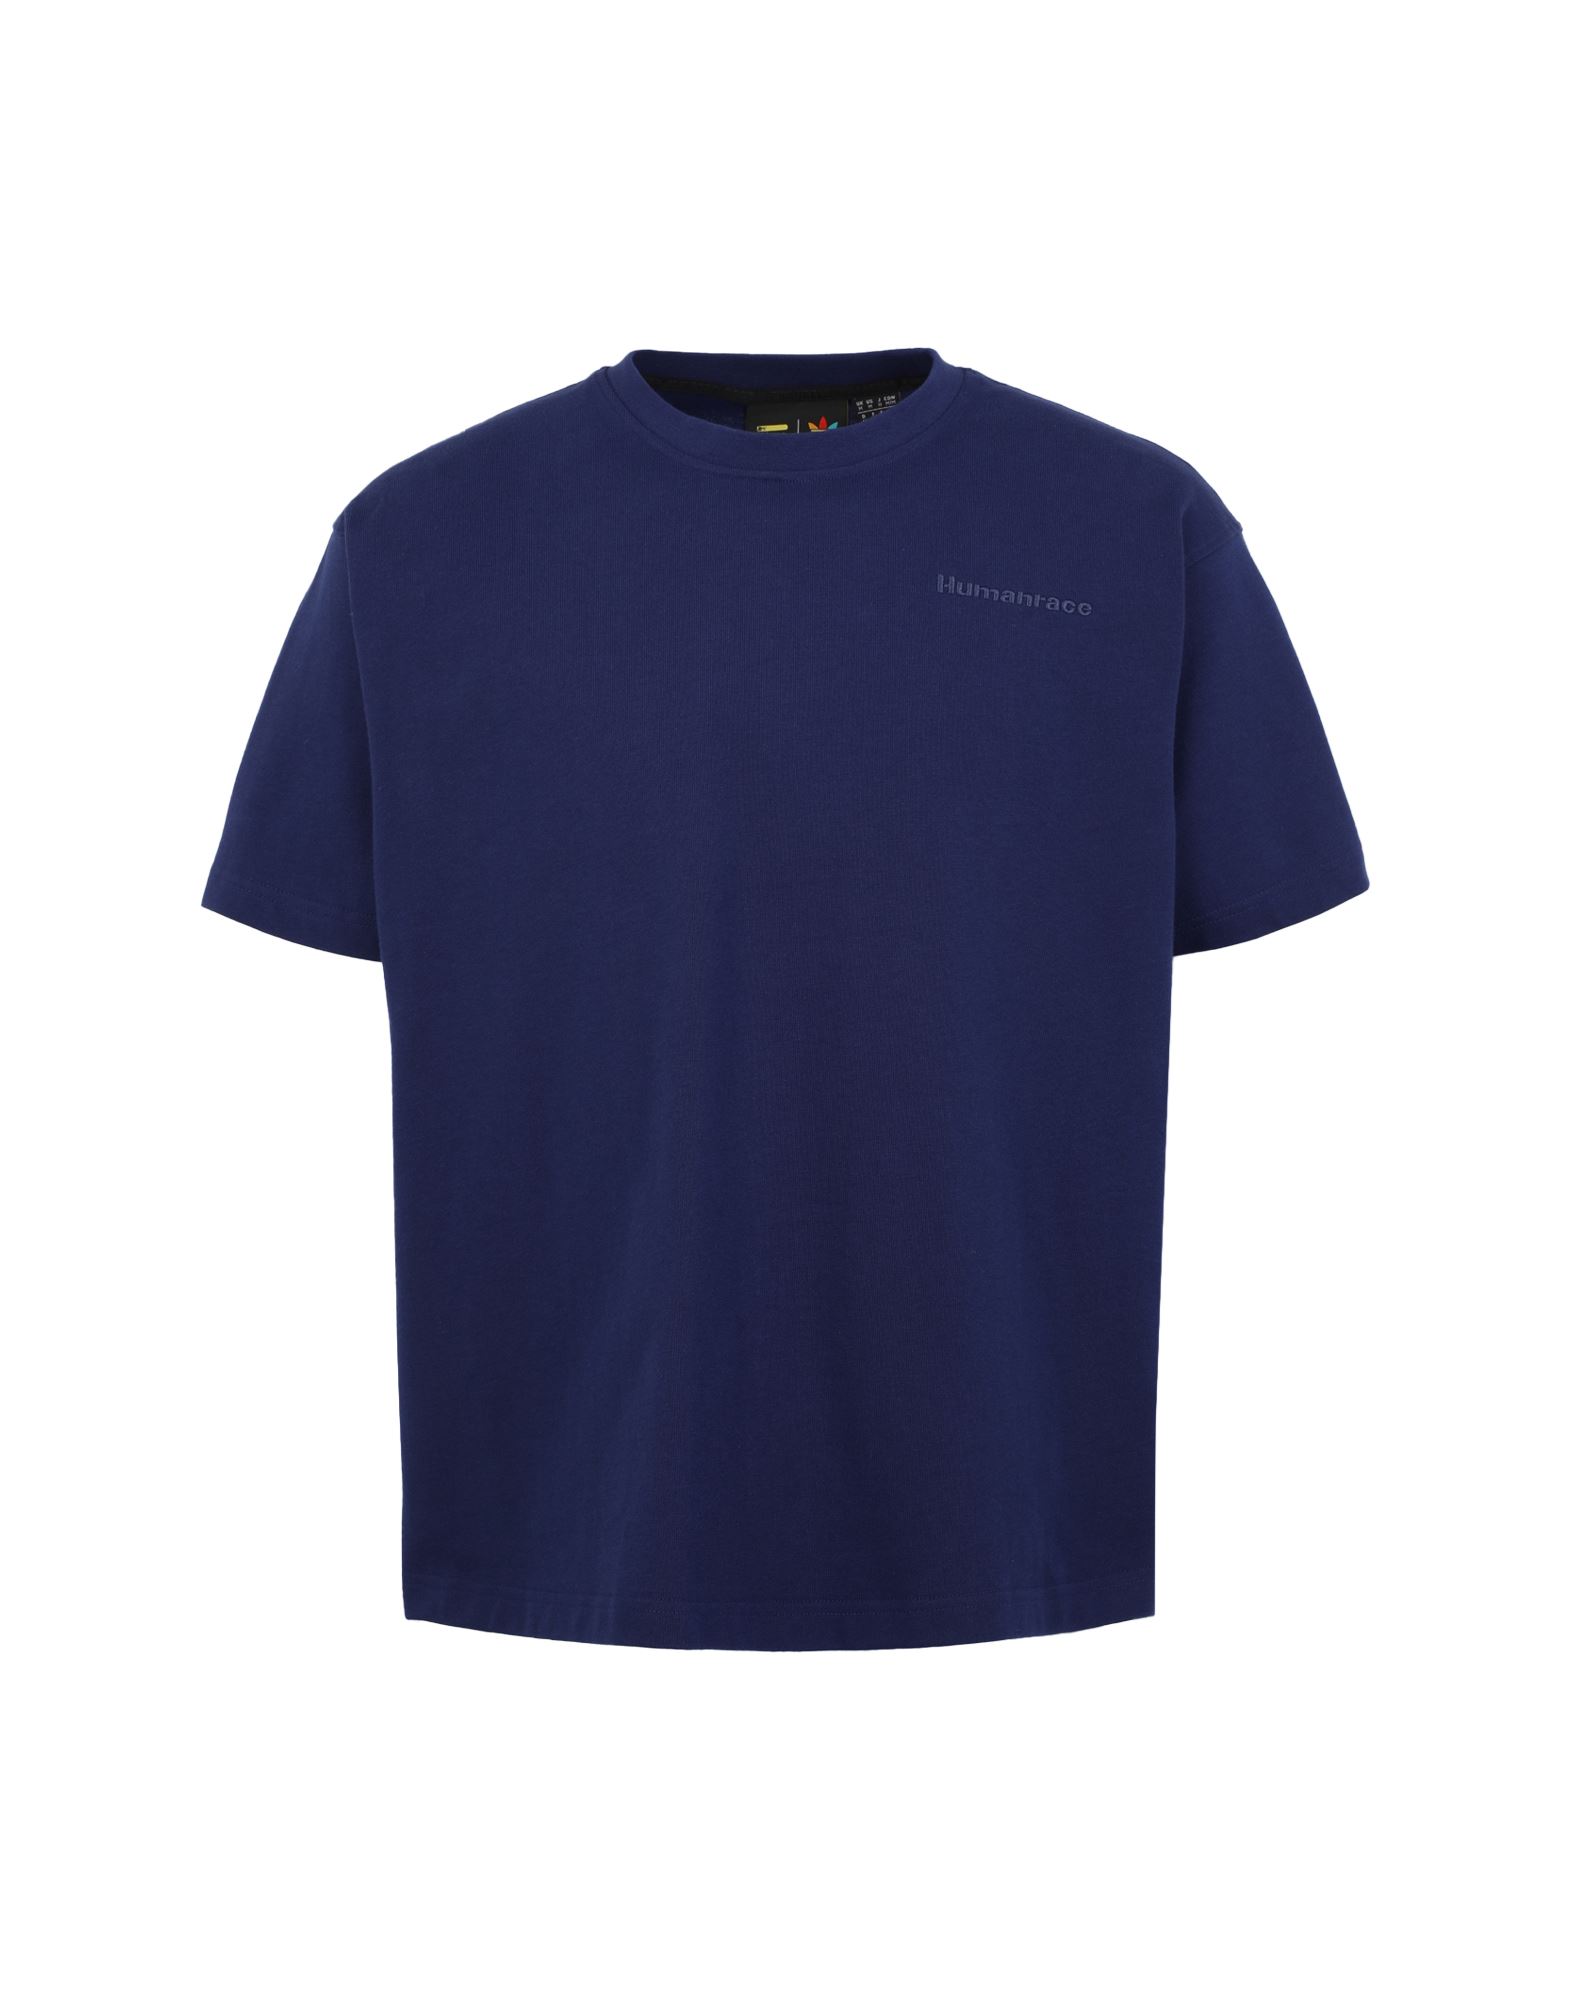 Adidas Originals By Pharrell Williams T-shirts In Dark Blue